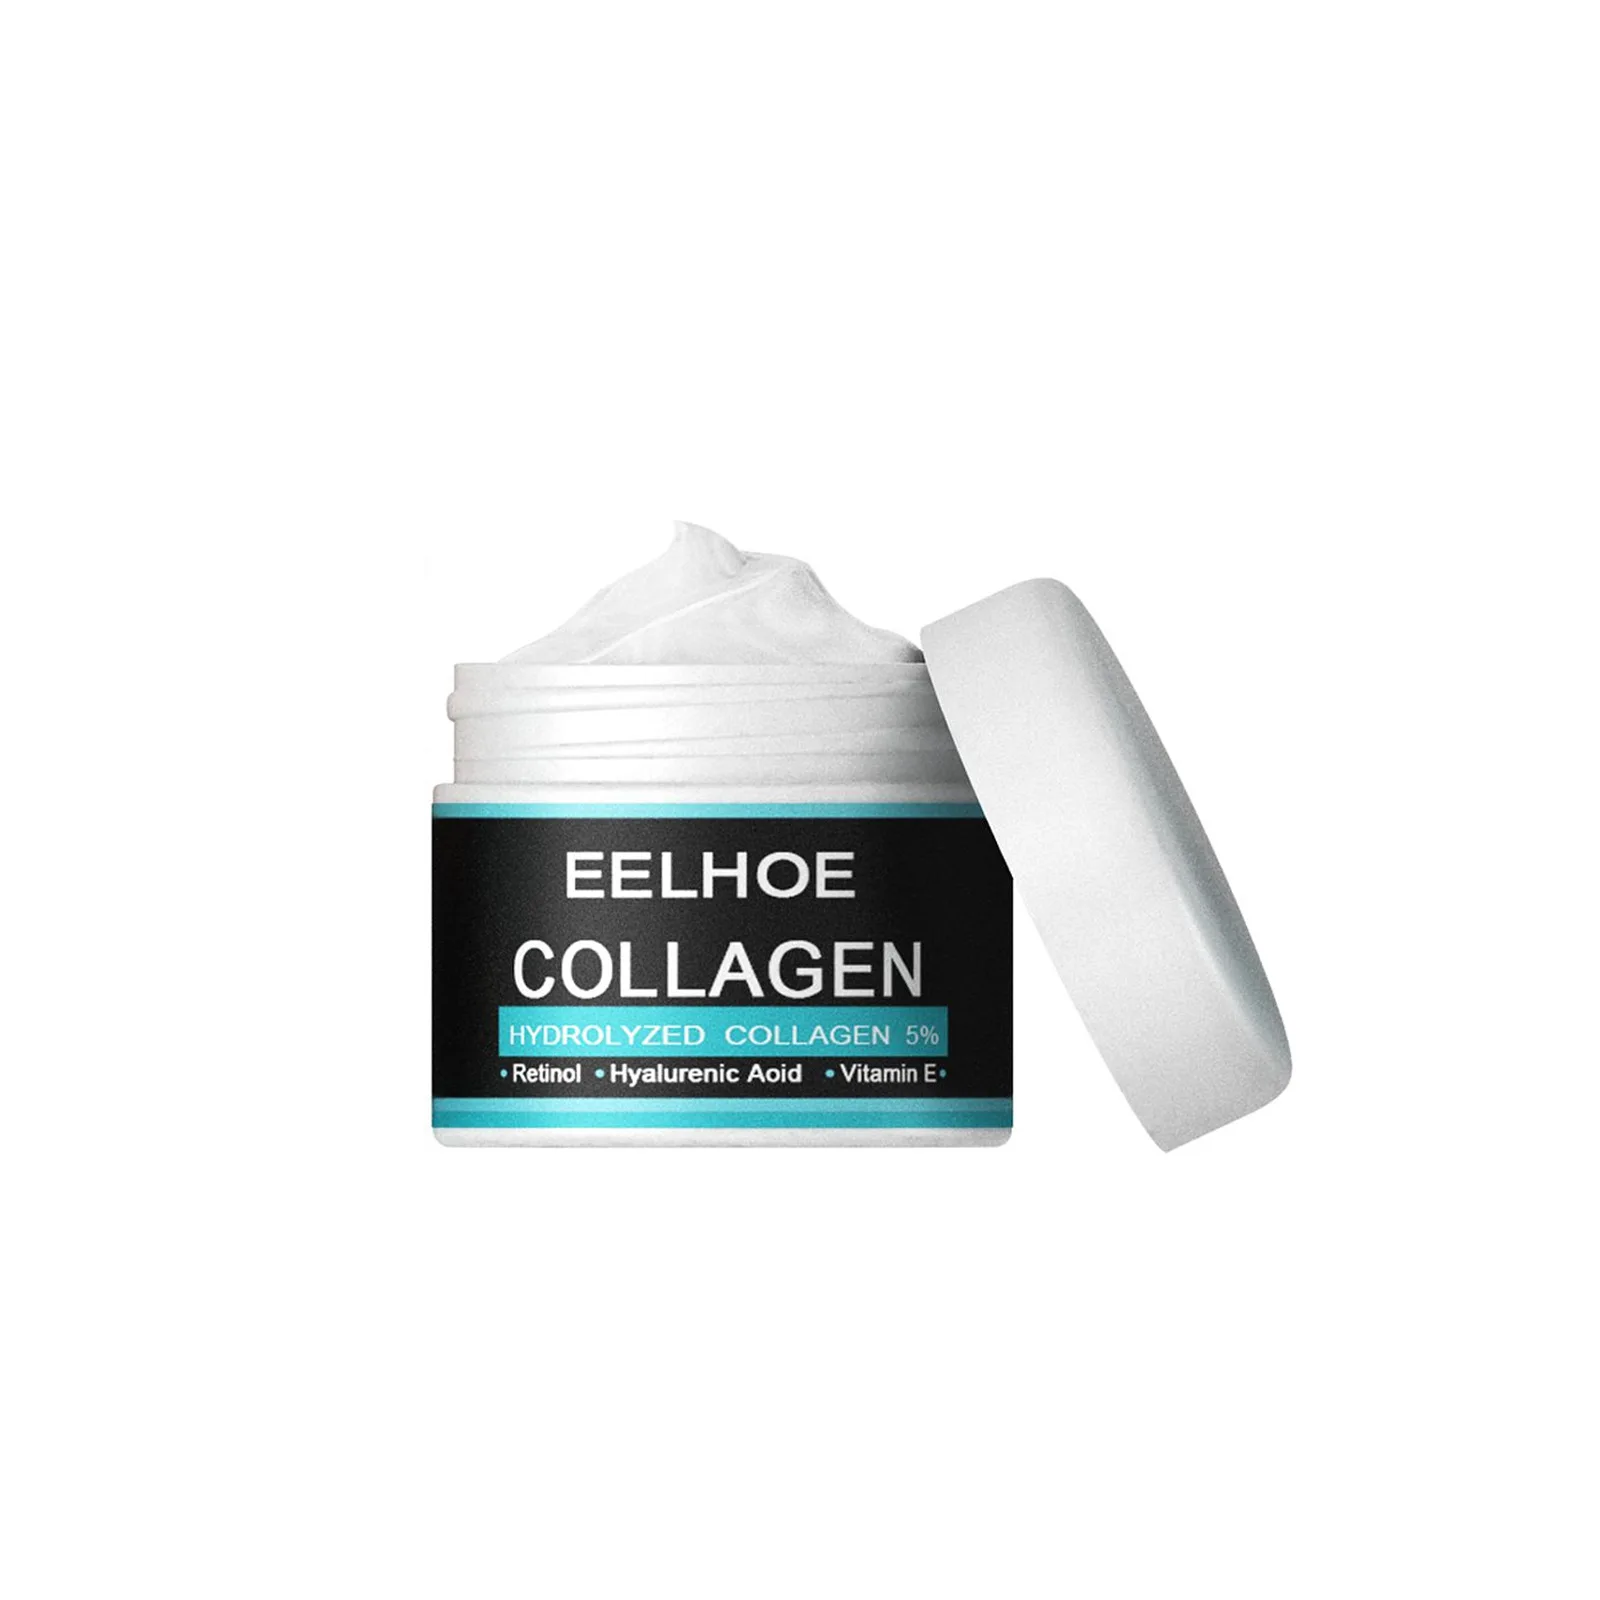 EELHOE Collagen Anti Wrinkle Creams For Men Man10g/30g/50g Hyaluronic Acid Vitamin E Cream Beauty Moisturizing Facial Care